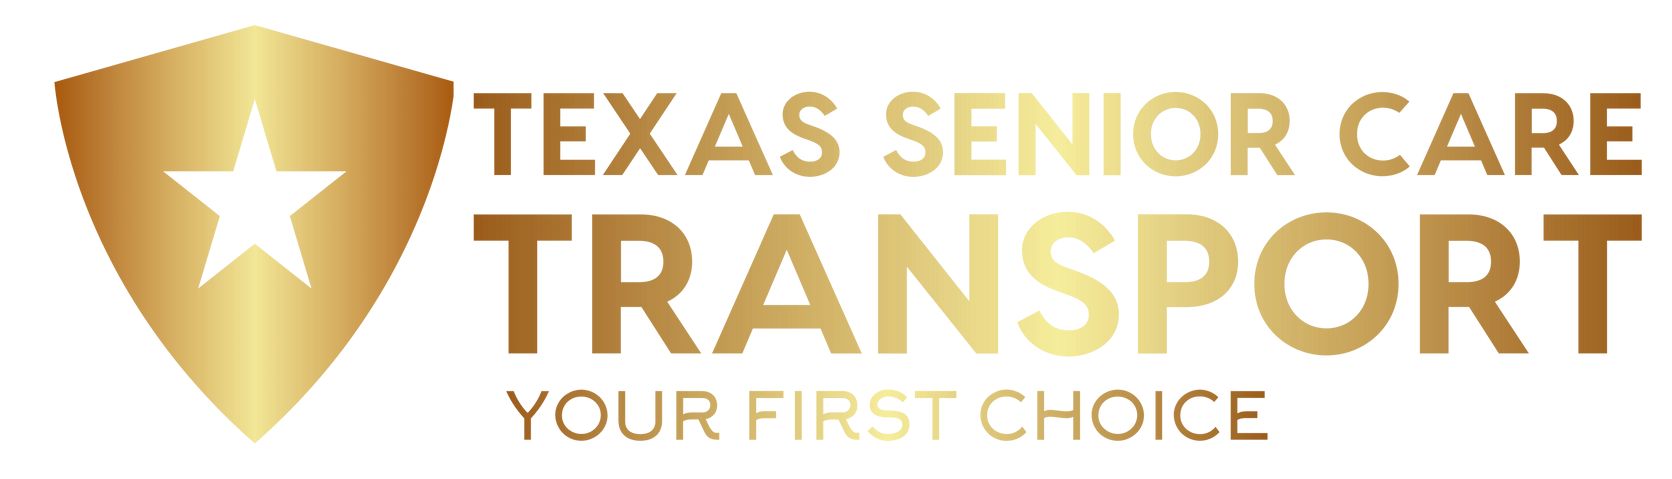 Texas Senior Care Transport_Logotype